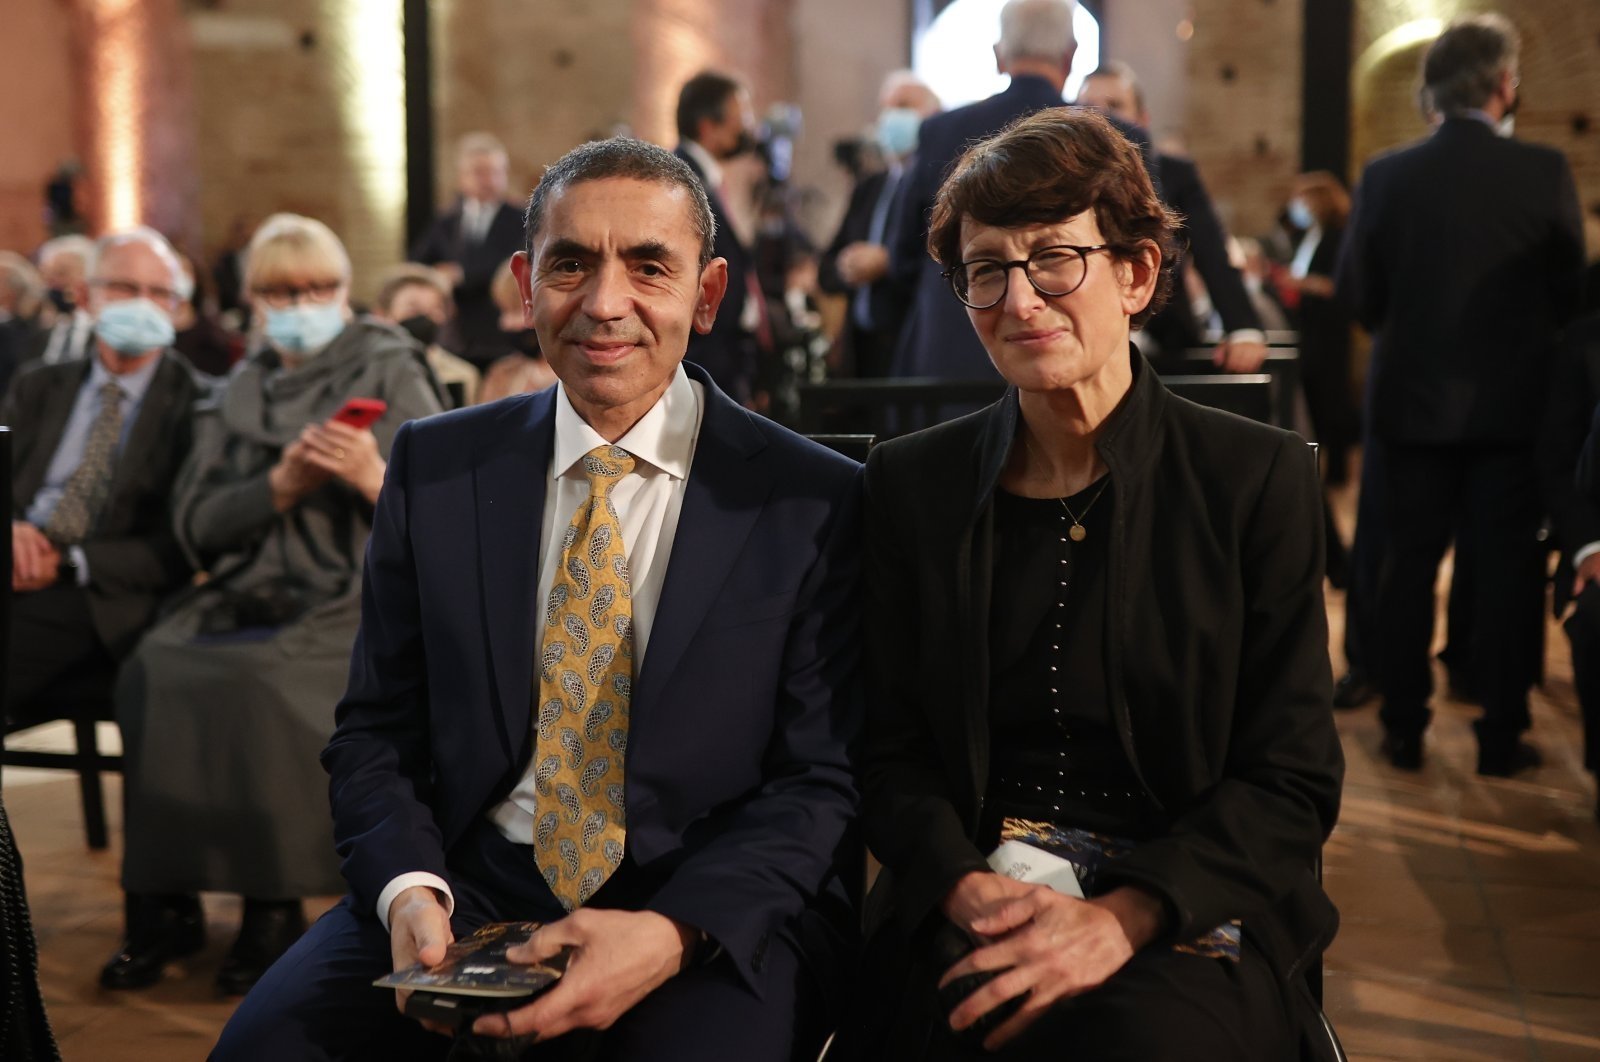 Turkish-German scientists Uğur Şahin and Özlem Türeci attend an award ceremony in Athens, Greece on Oct. 13, 2021. (AA Photo)